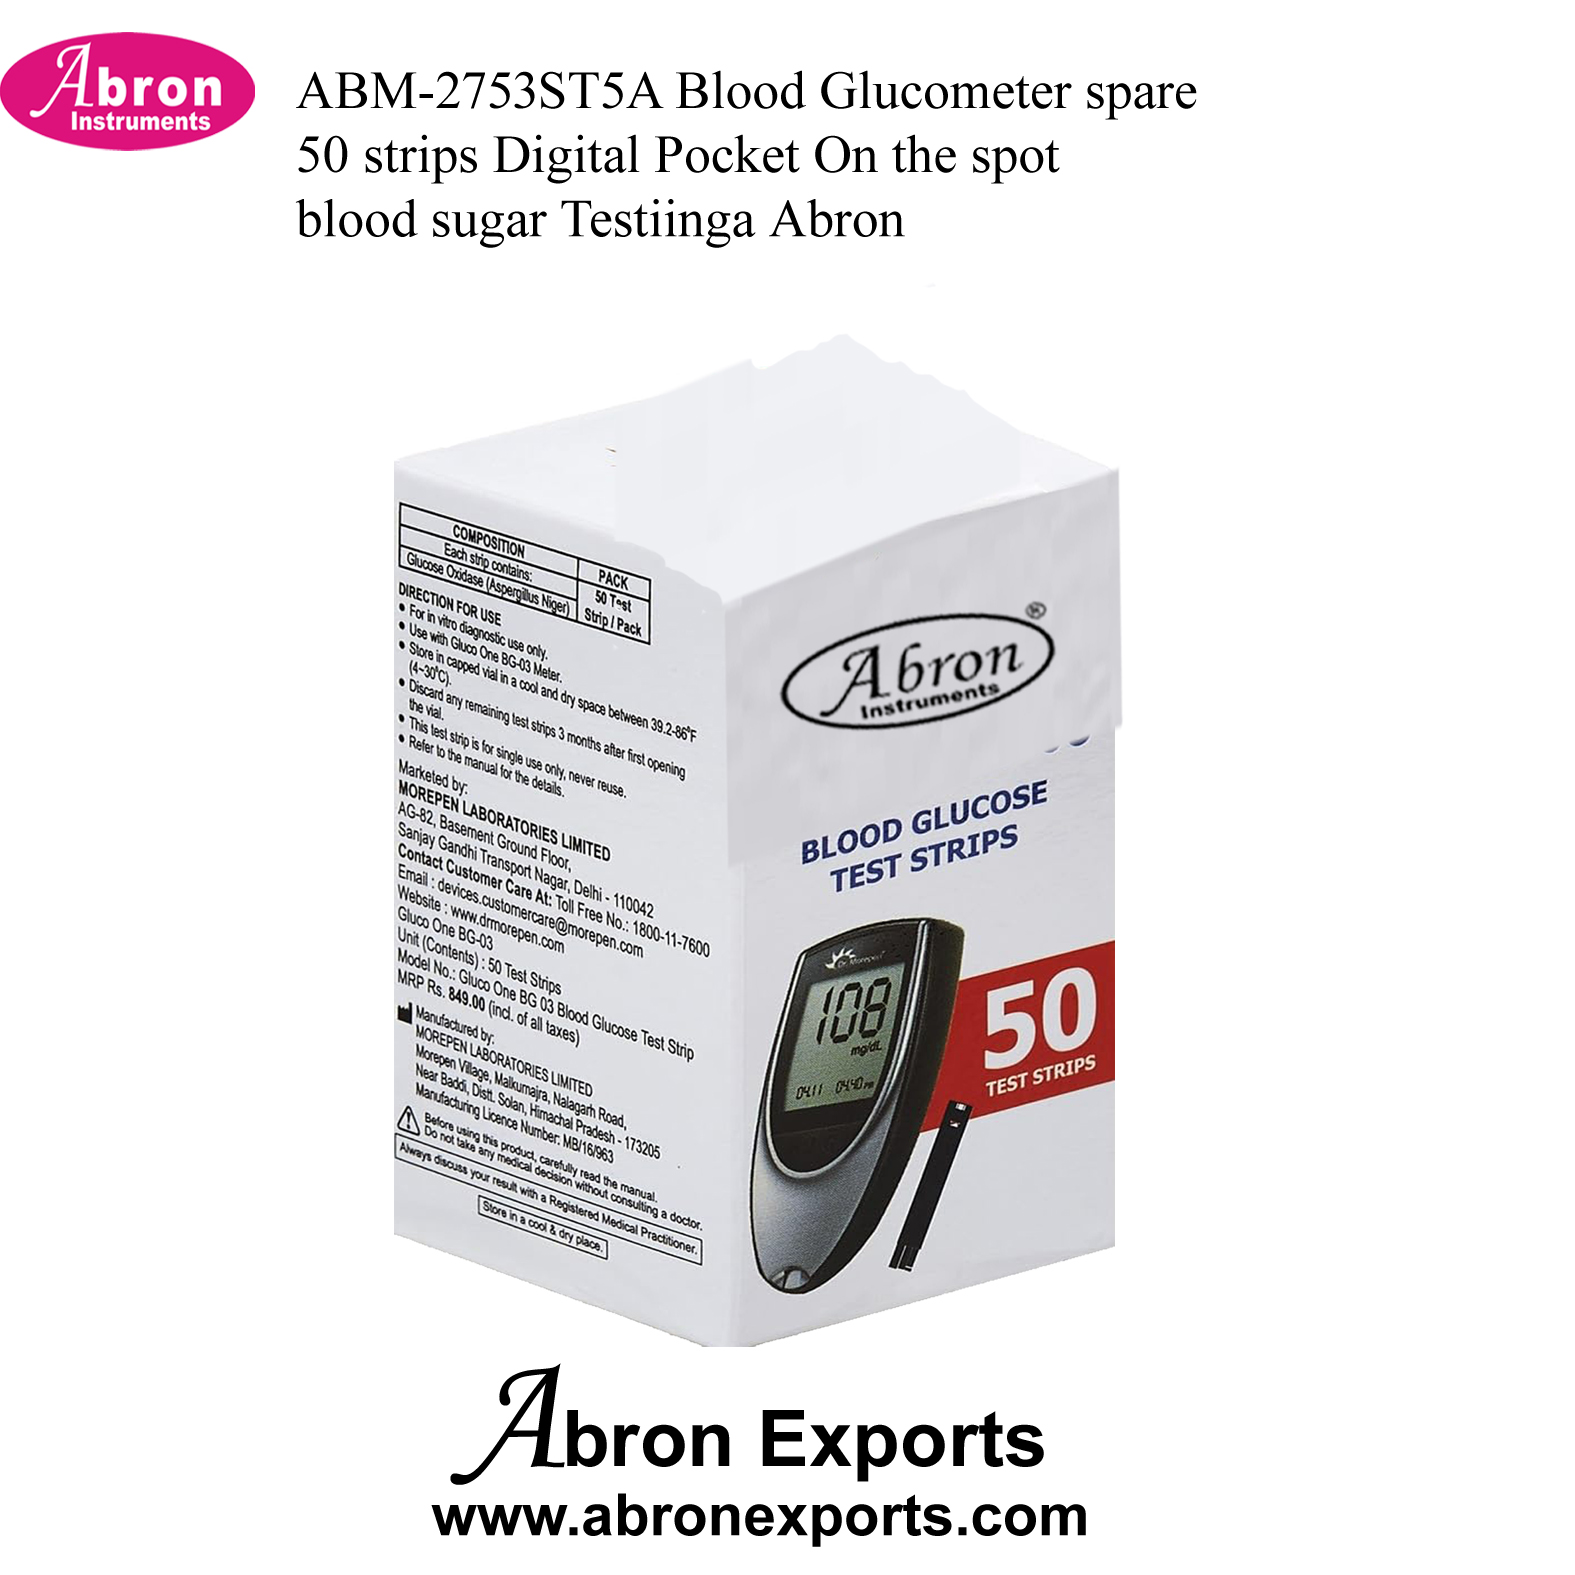 Blood Glucometer Spare 50 Strips Digital Pocket On the Spot Blood Sugar Testing Abron ABM-2753ST5A 